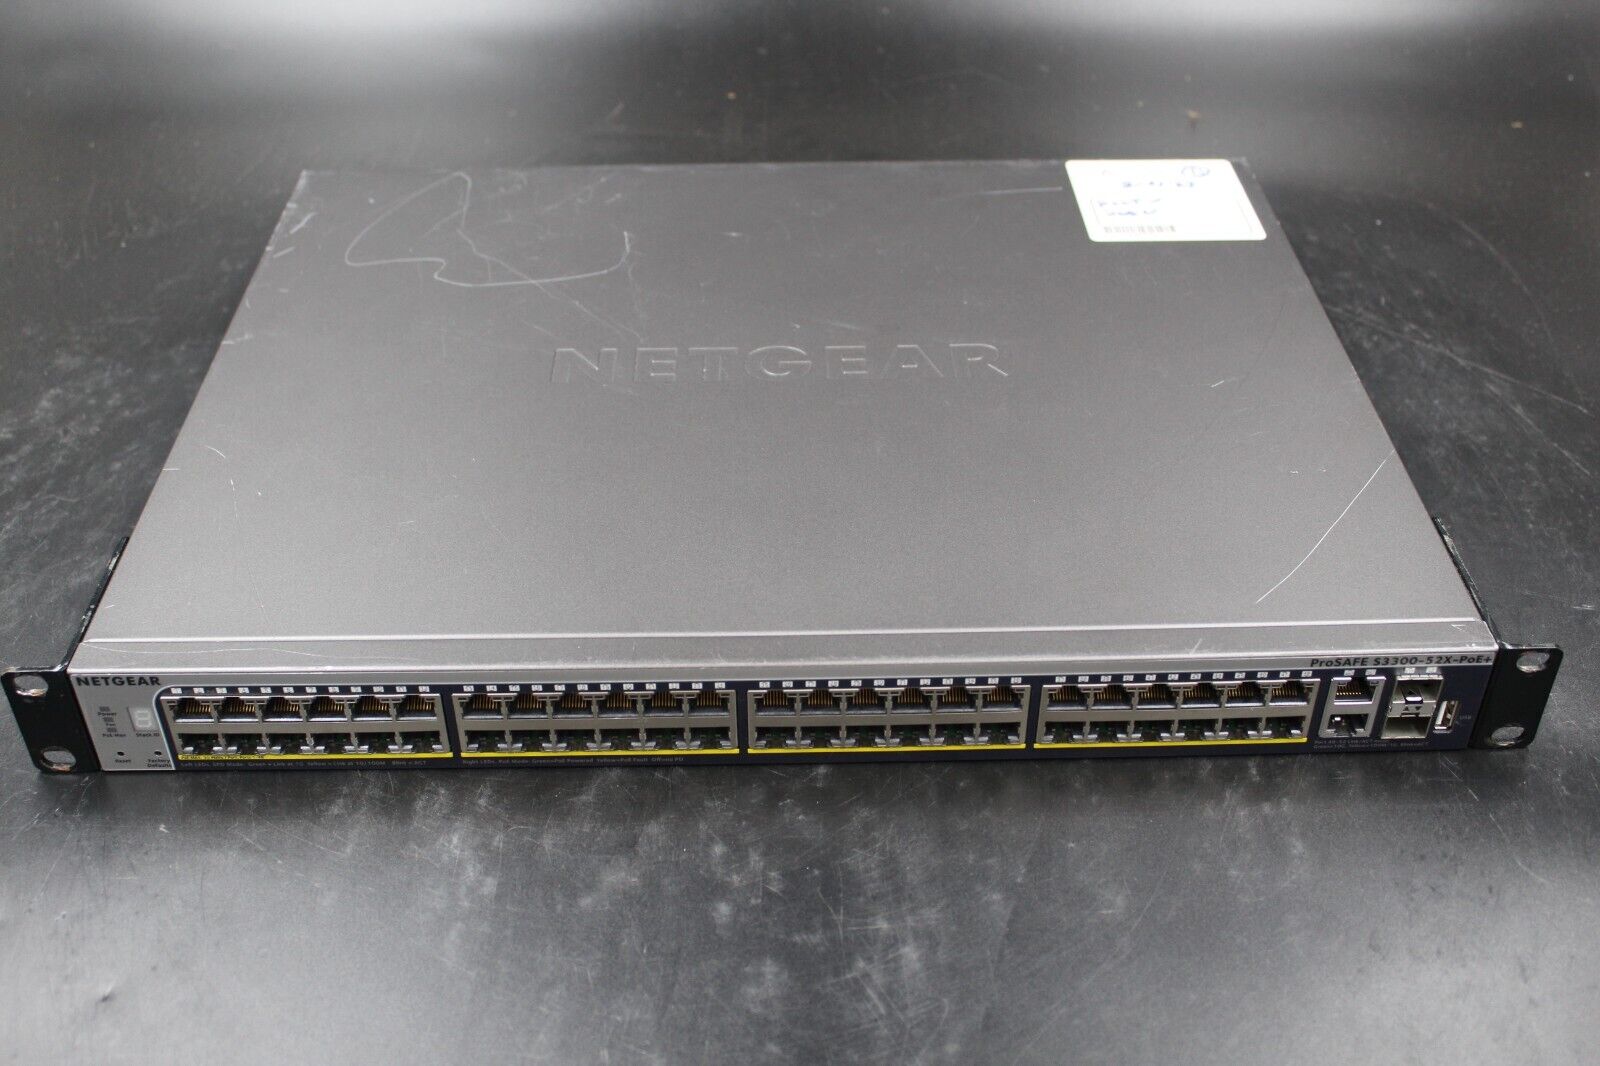 Netgear Prosafe S3300-52X-PoE+ 48-Port Gigabit Ethernet Network Switch TESTED